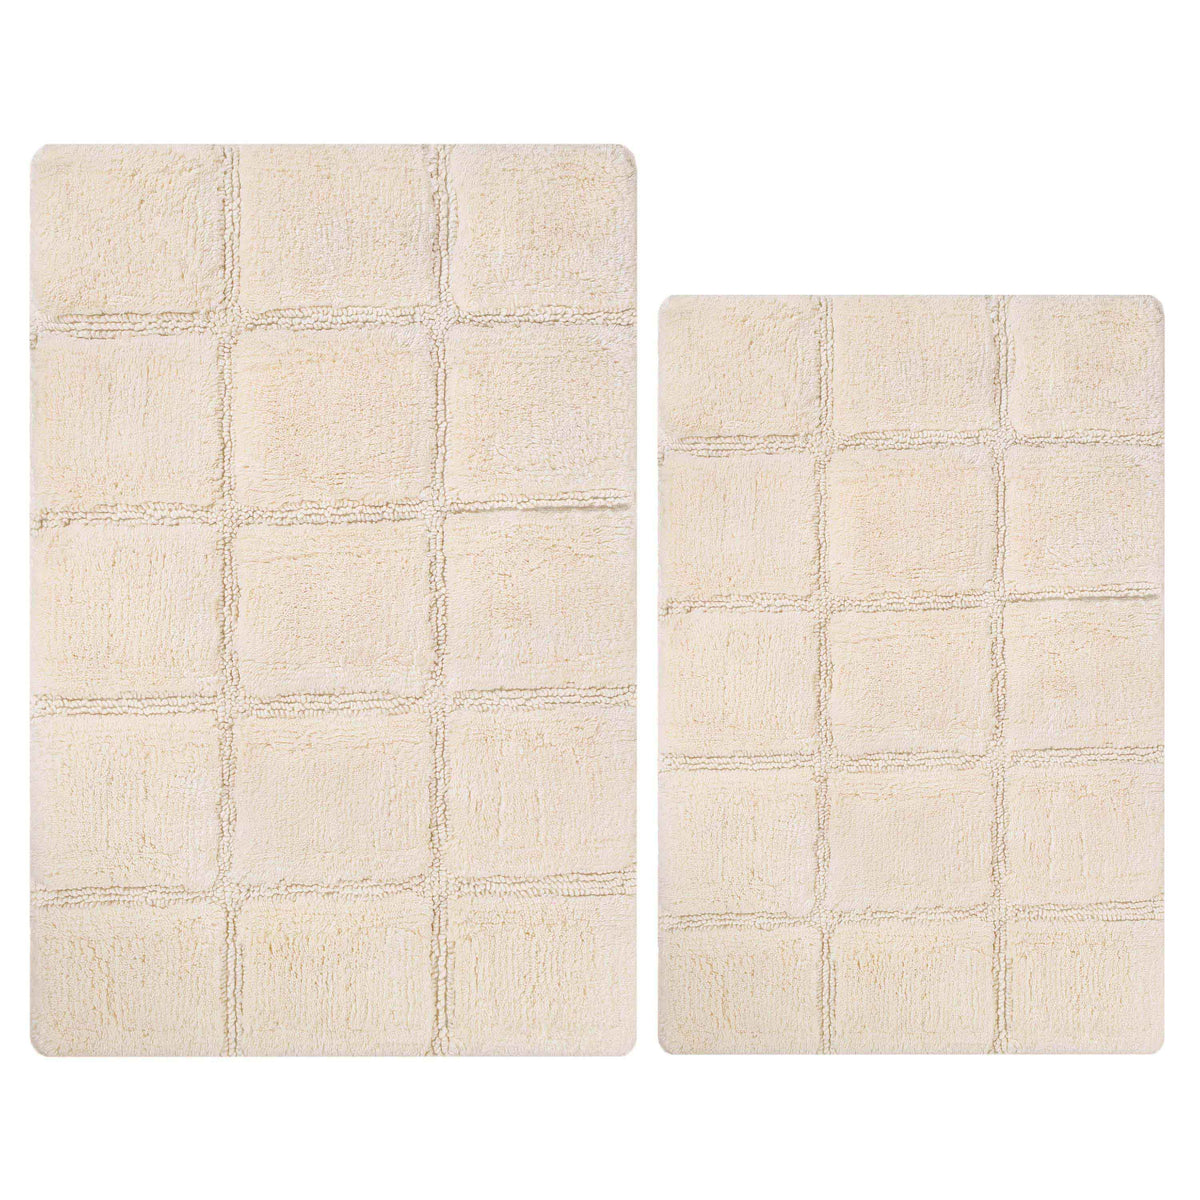 2 Piece Cotton Checkered Solid Non Slip Bath Rug Set - Ivory